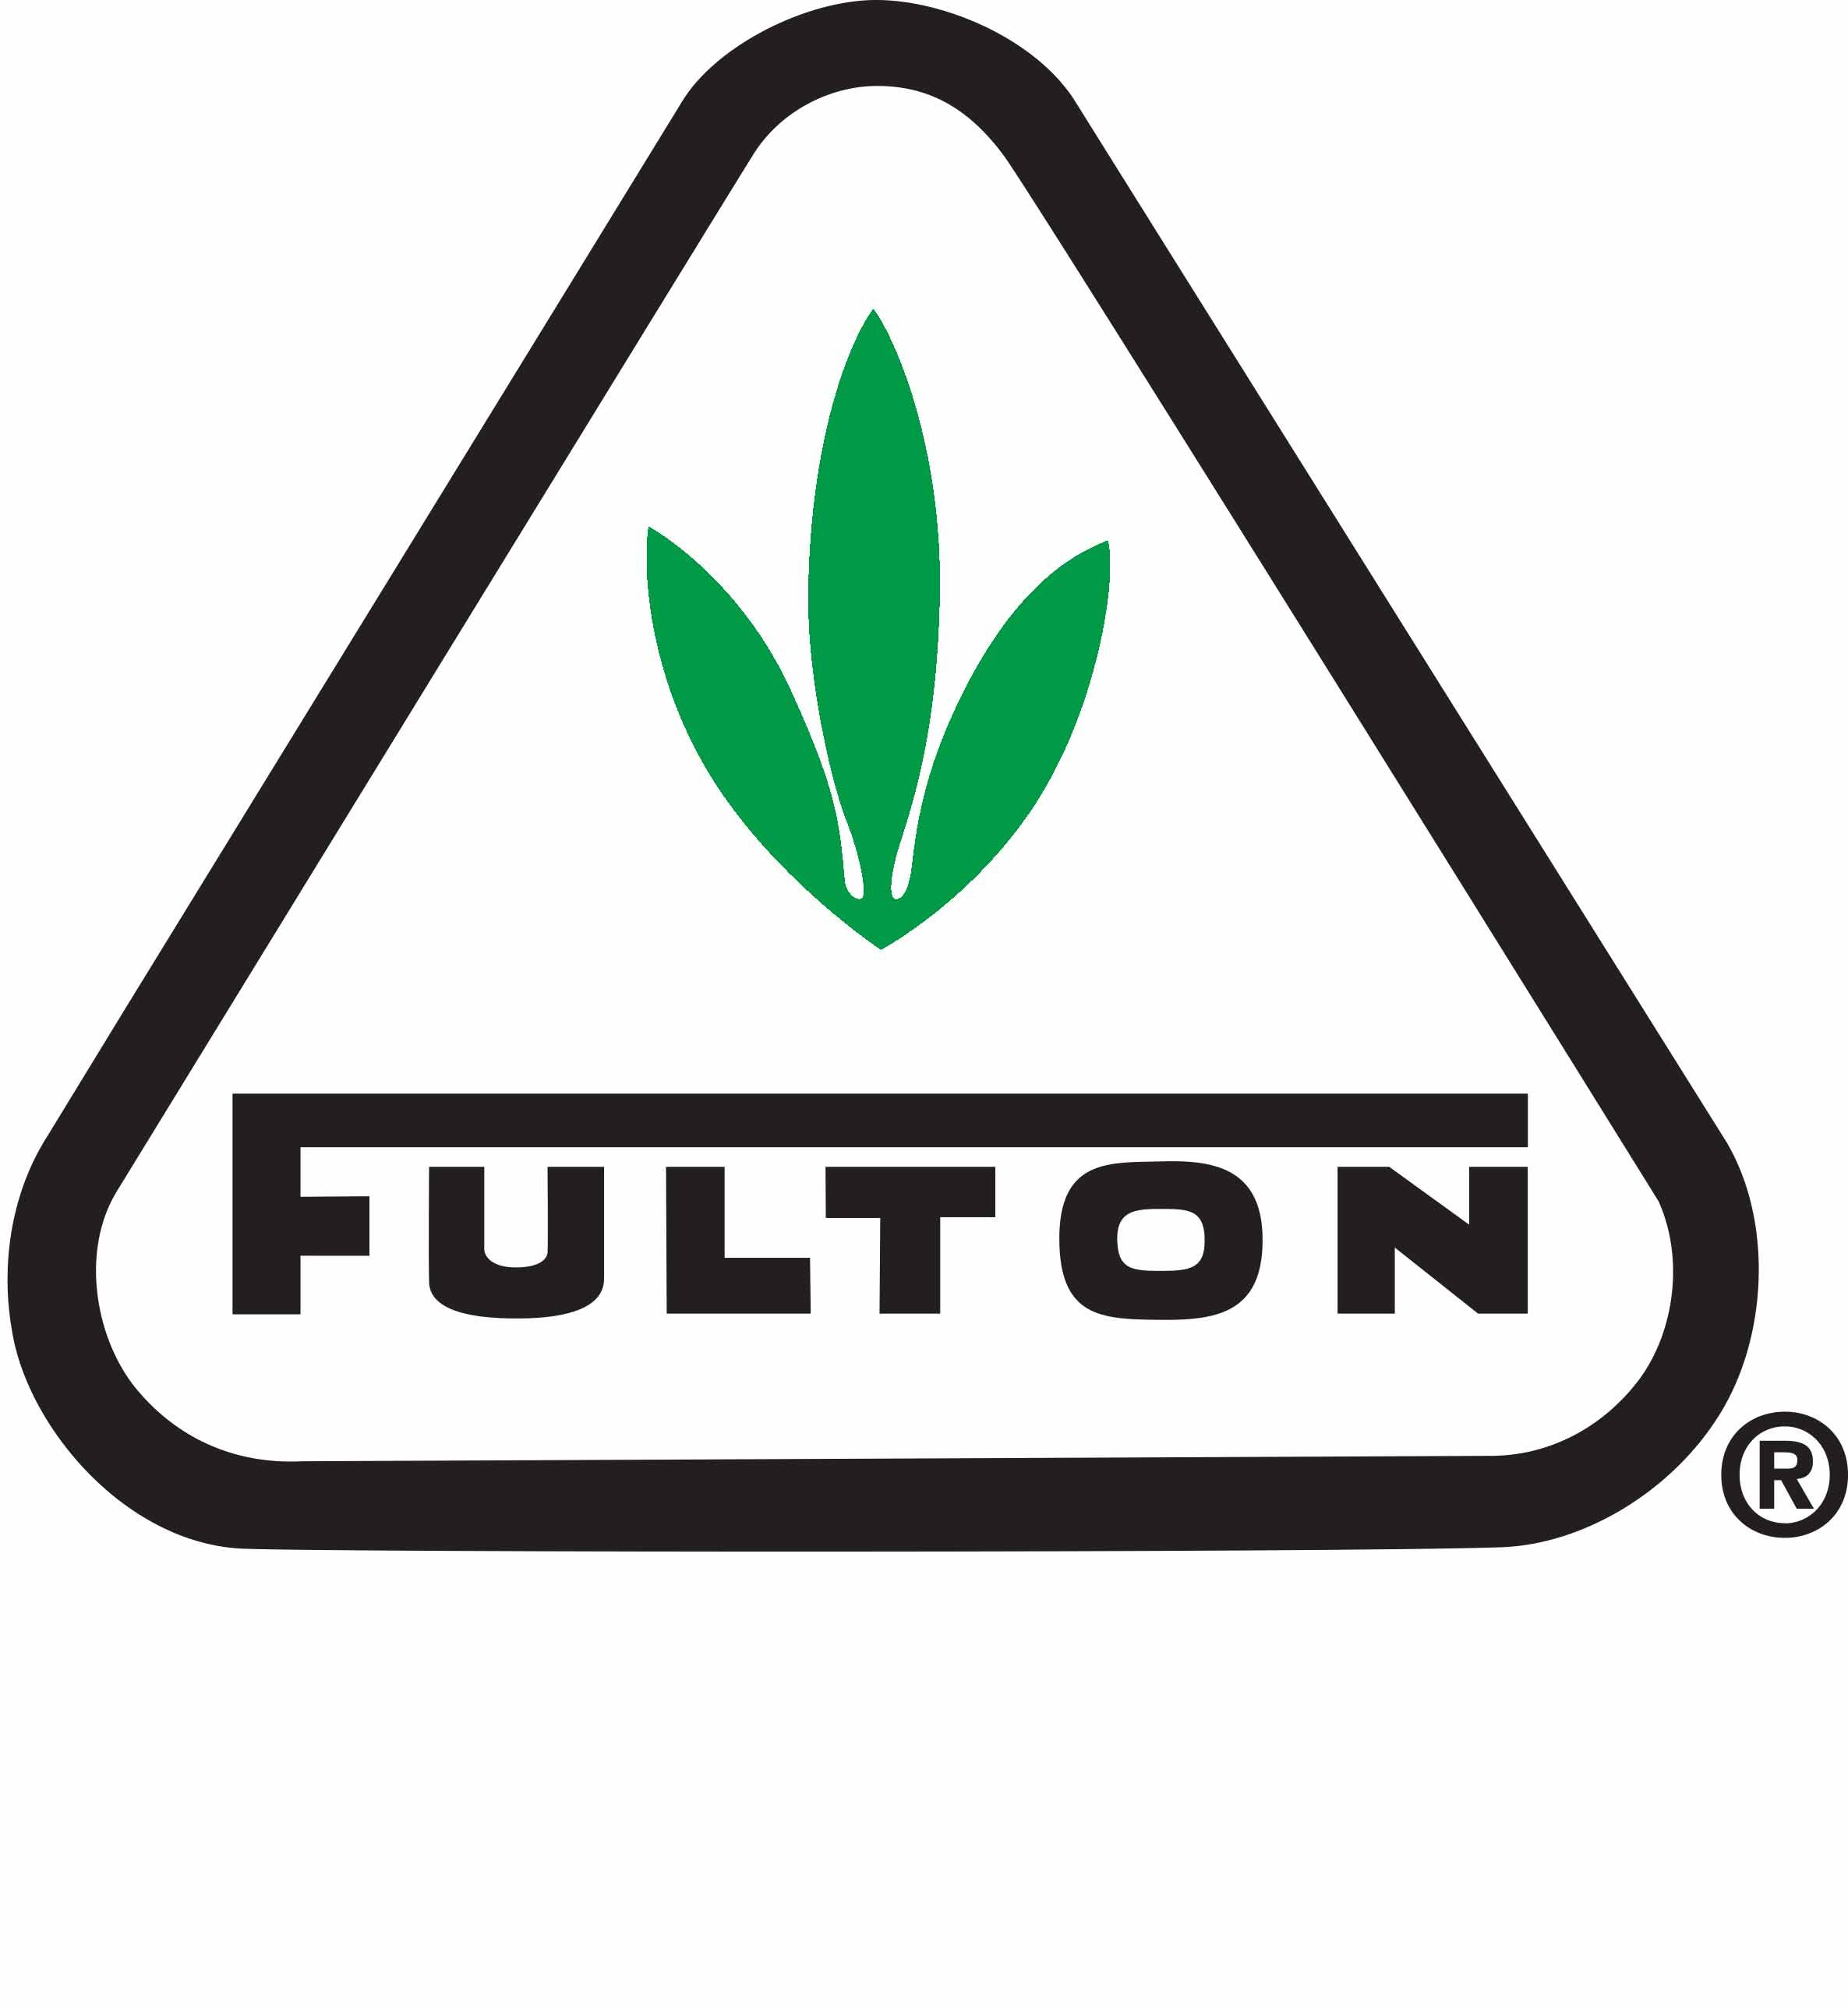 A Fulton Company Ltd